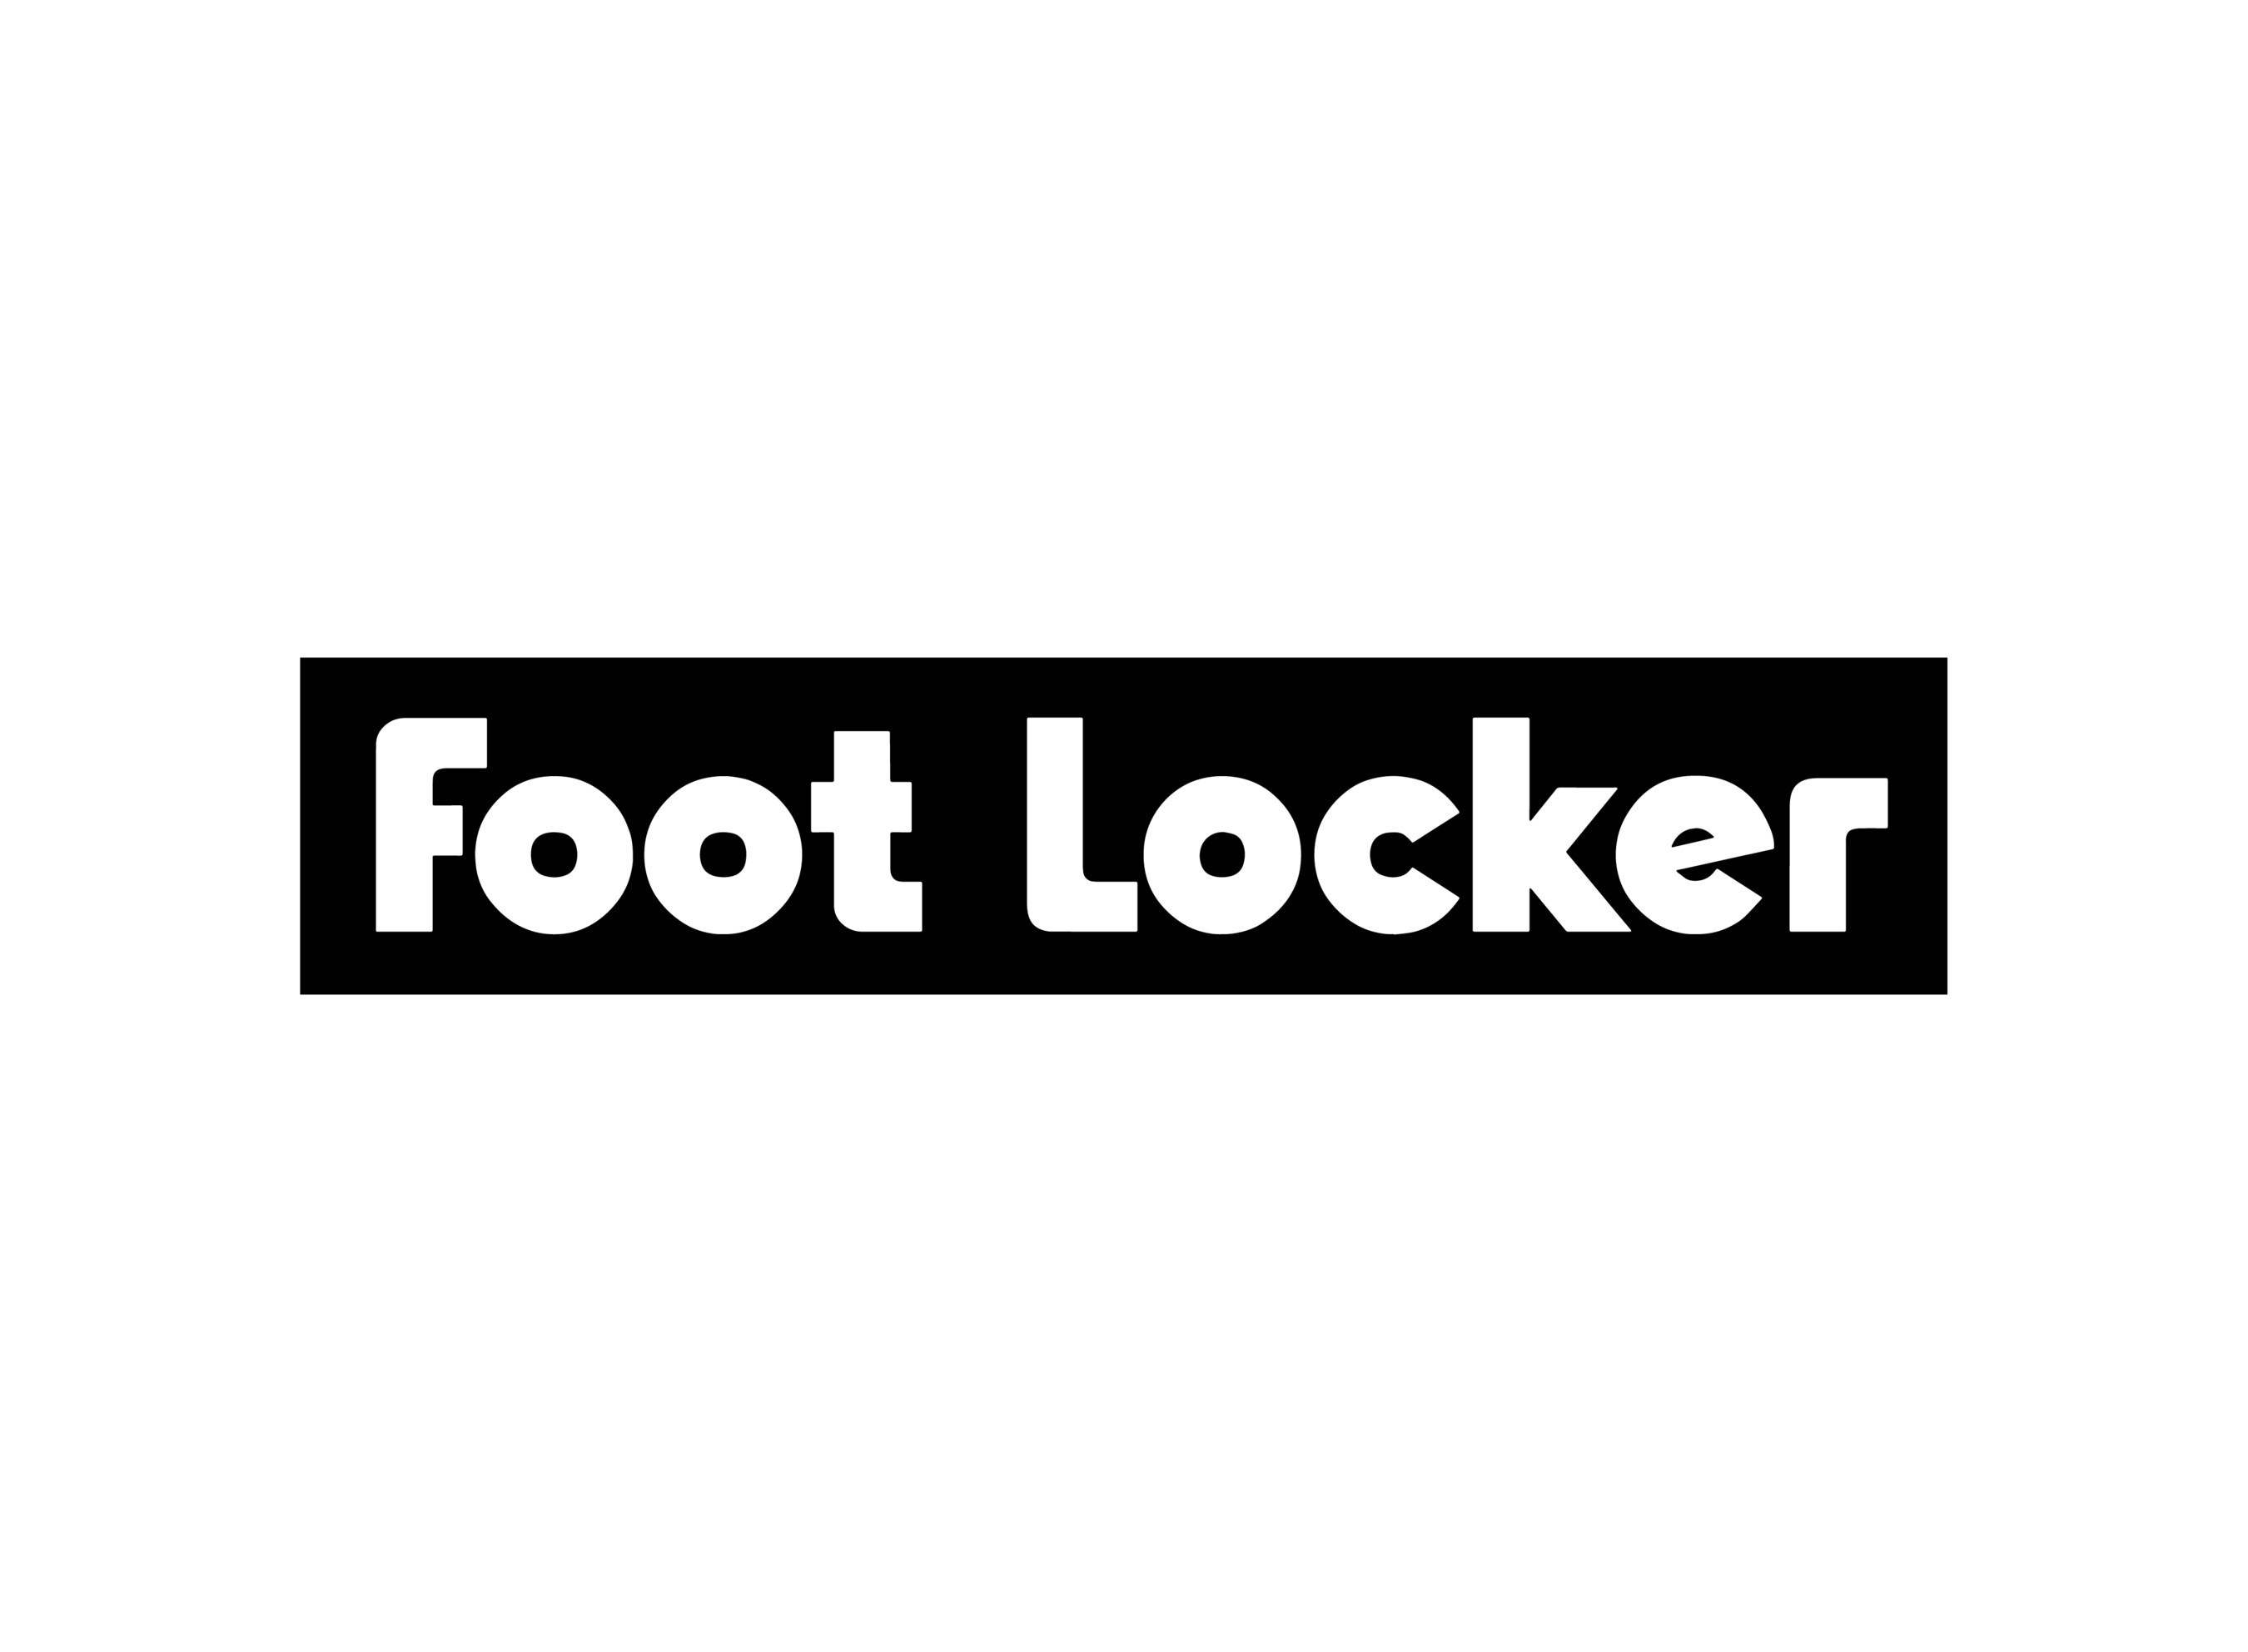 reebok foot locker france